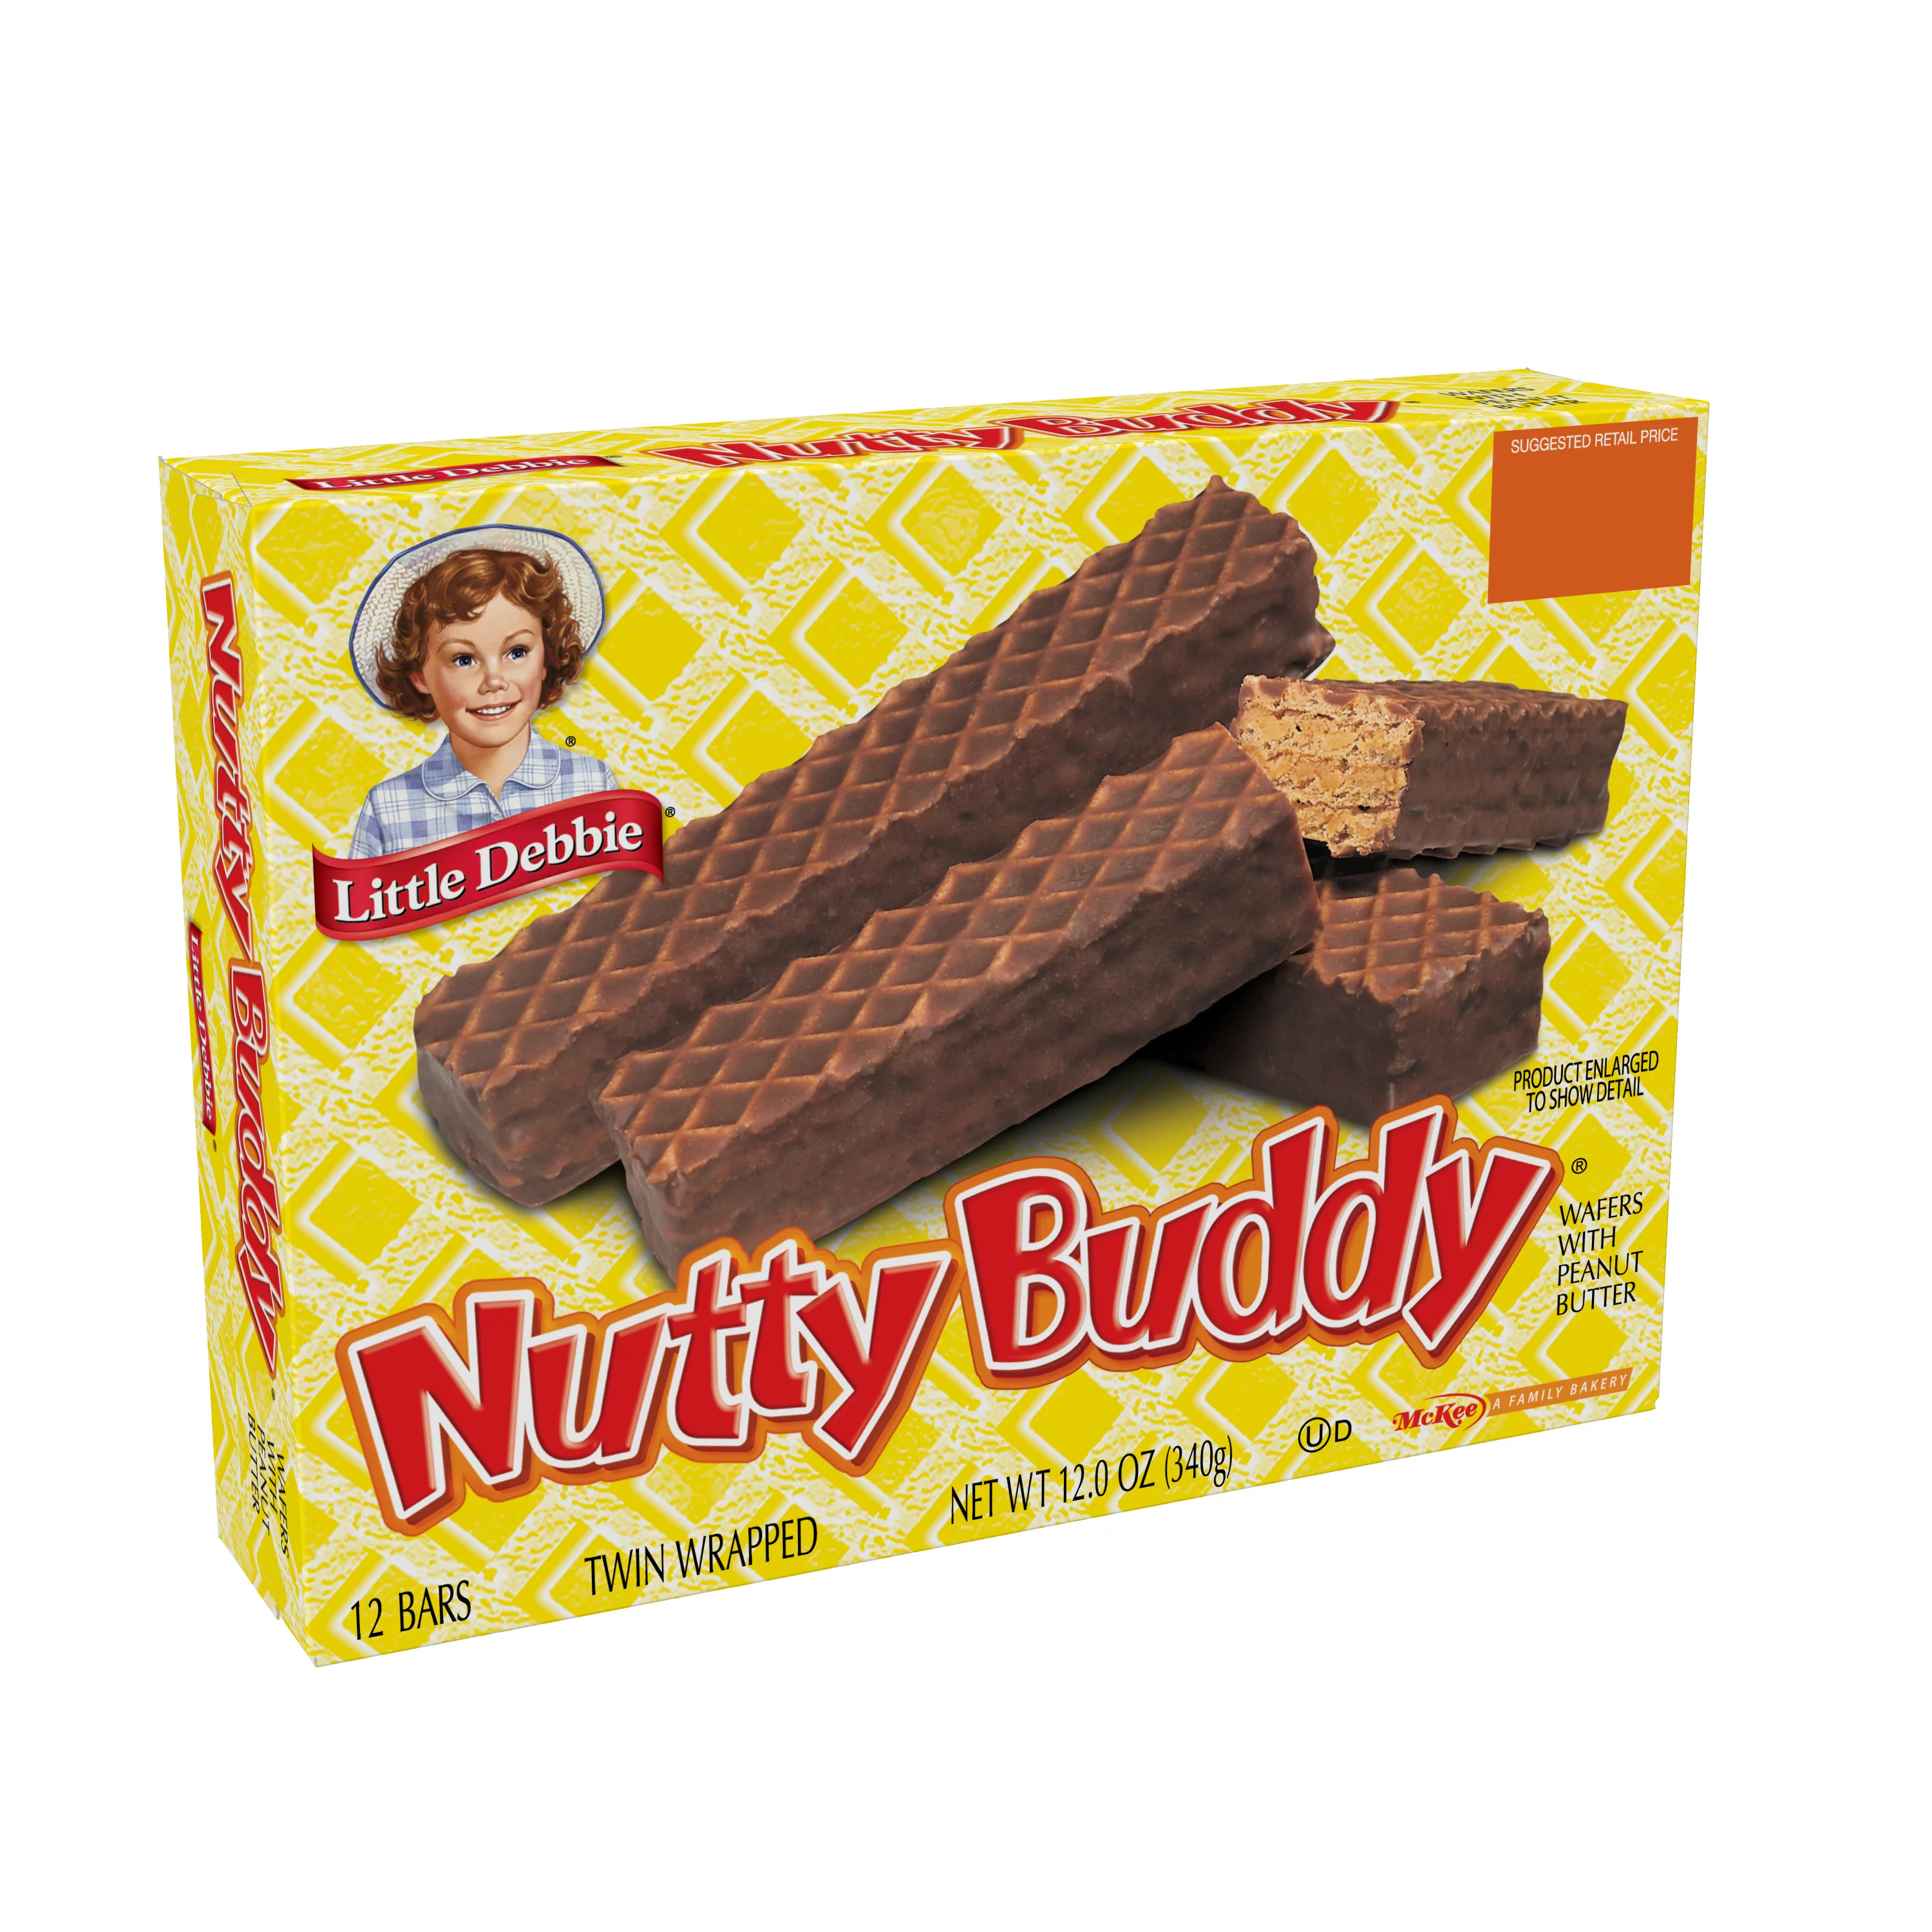 Little Debbie NUTTY BUDDY ® wafers bar